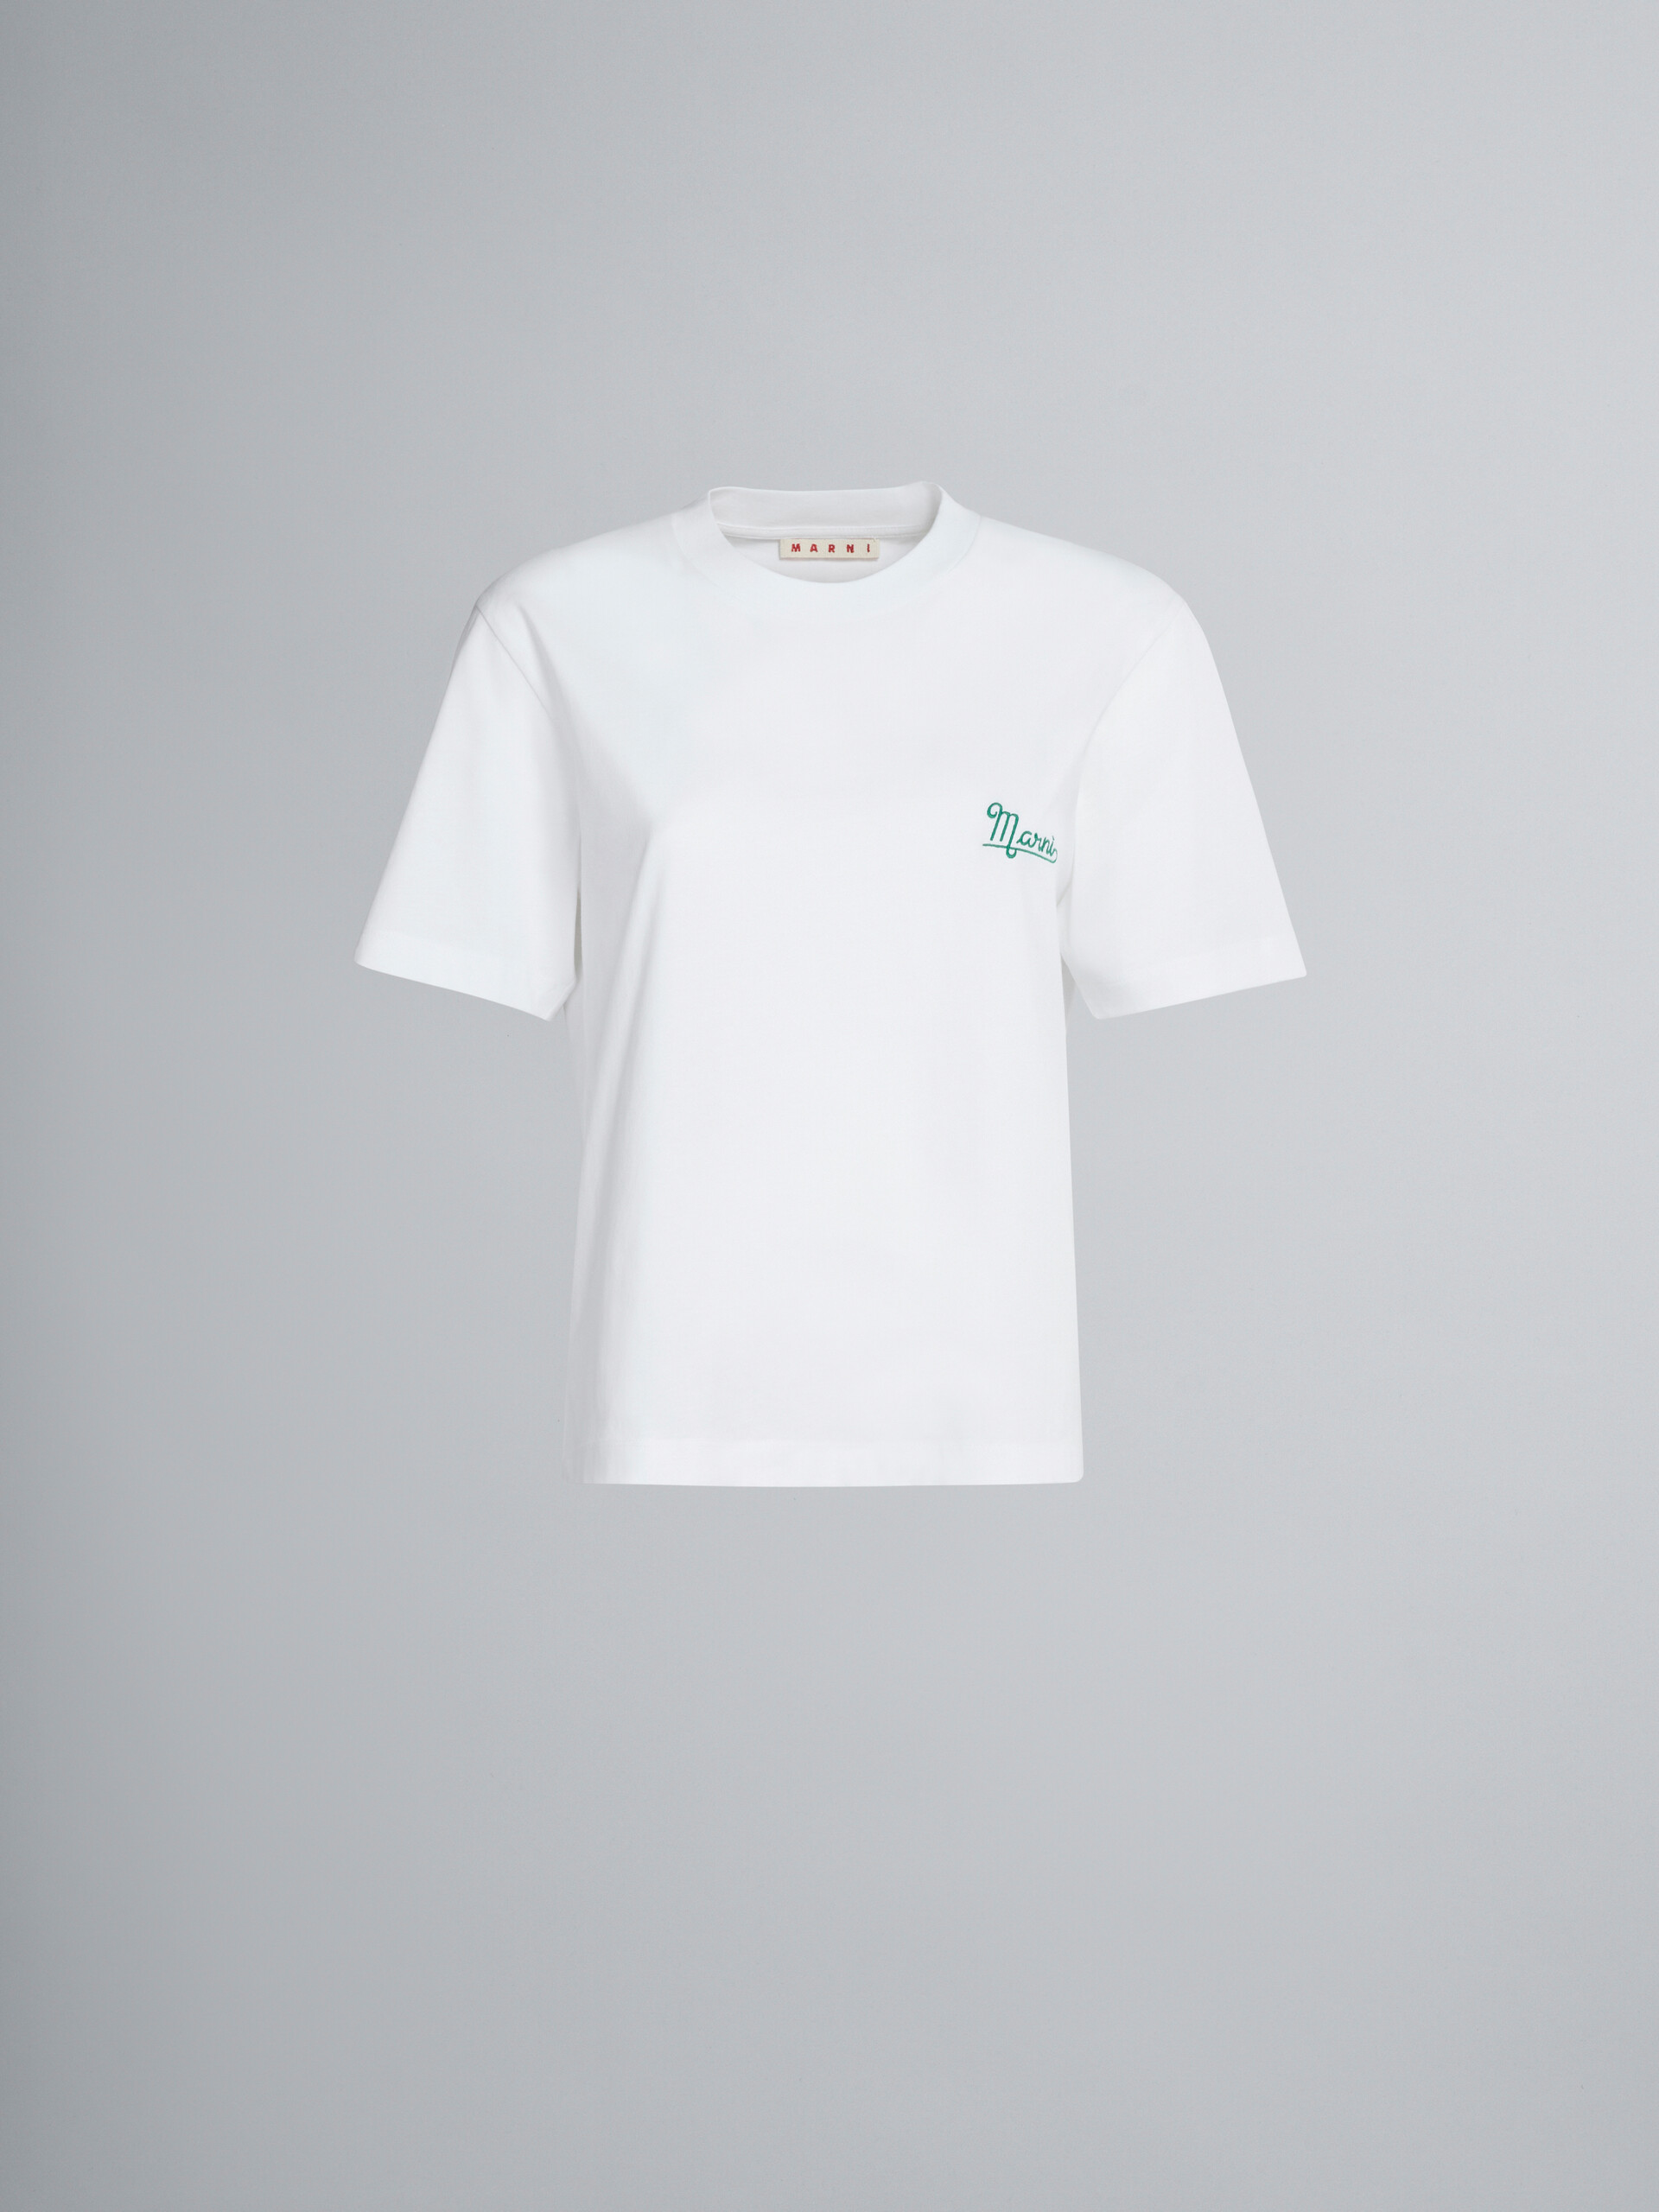 Set de 3 camisetas de algodón ecológico - Camisetas - Image 1